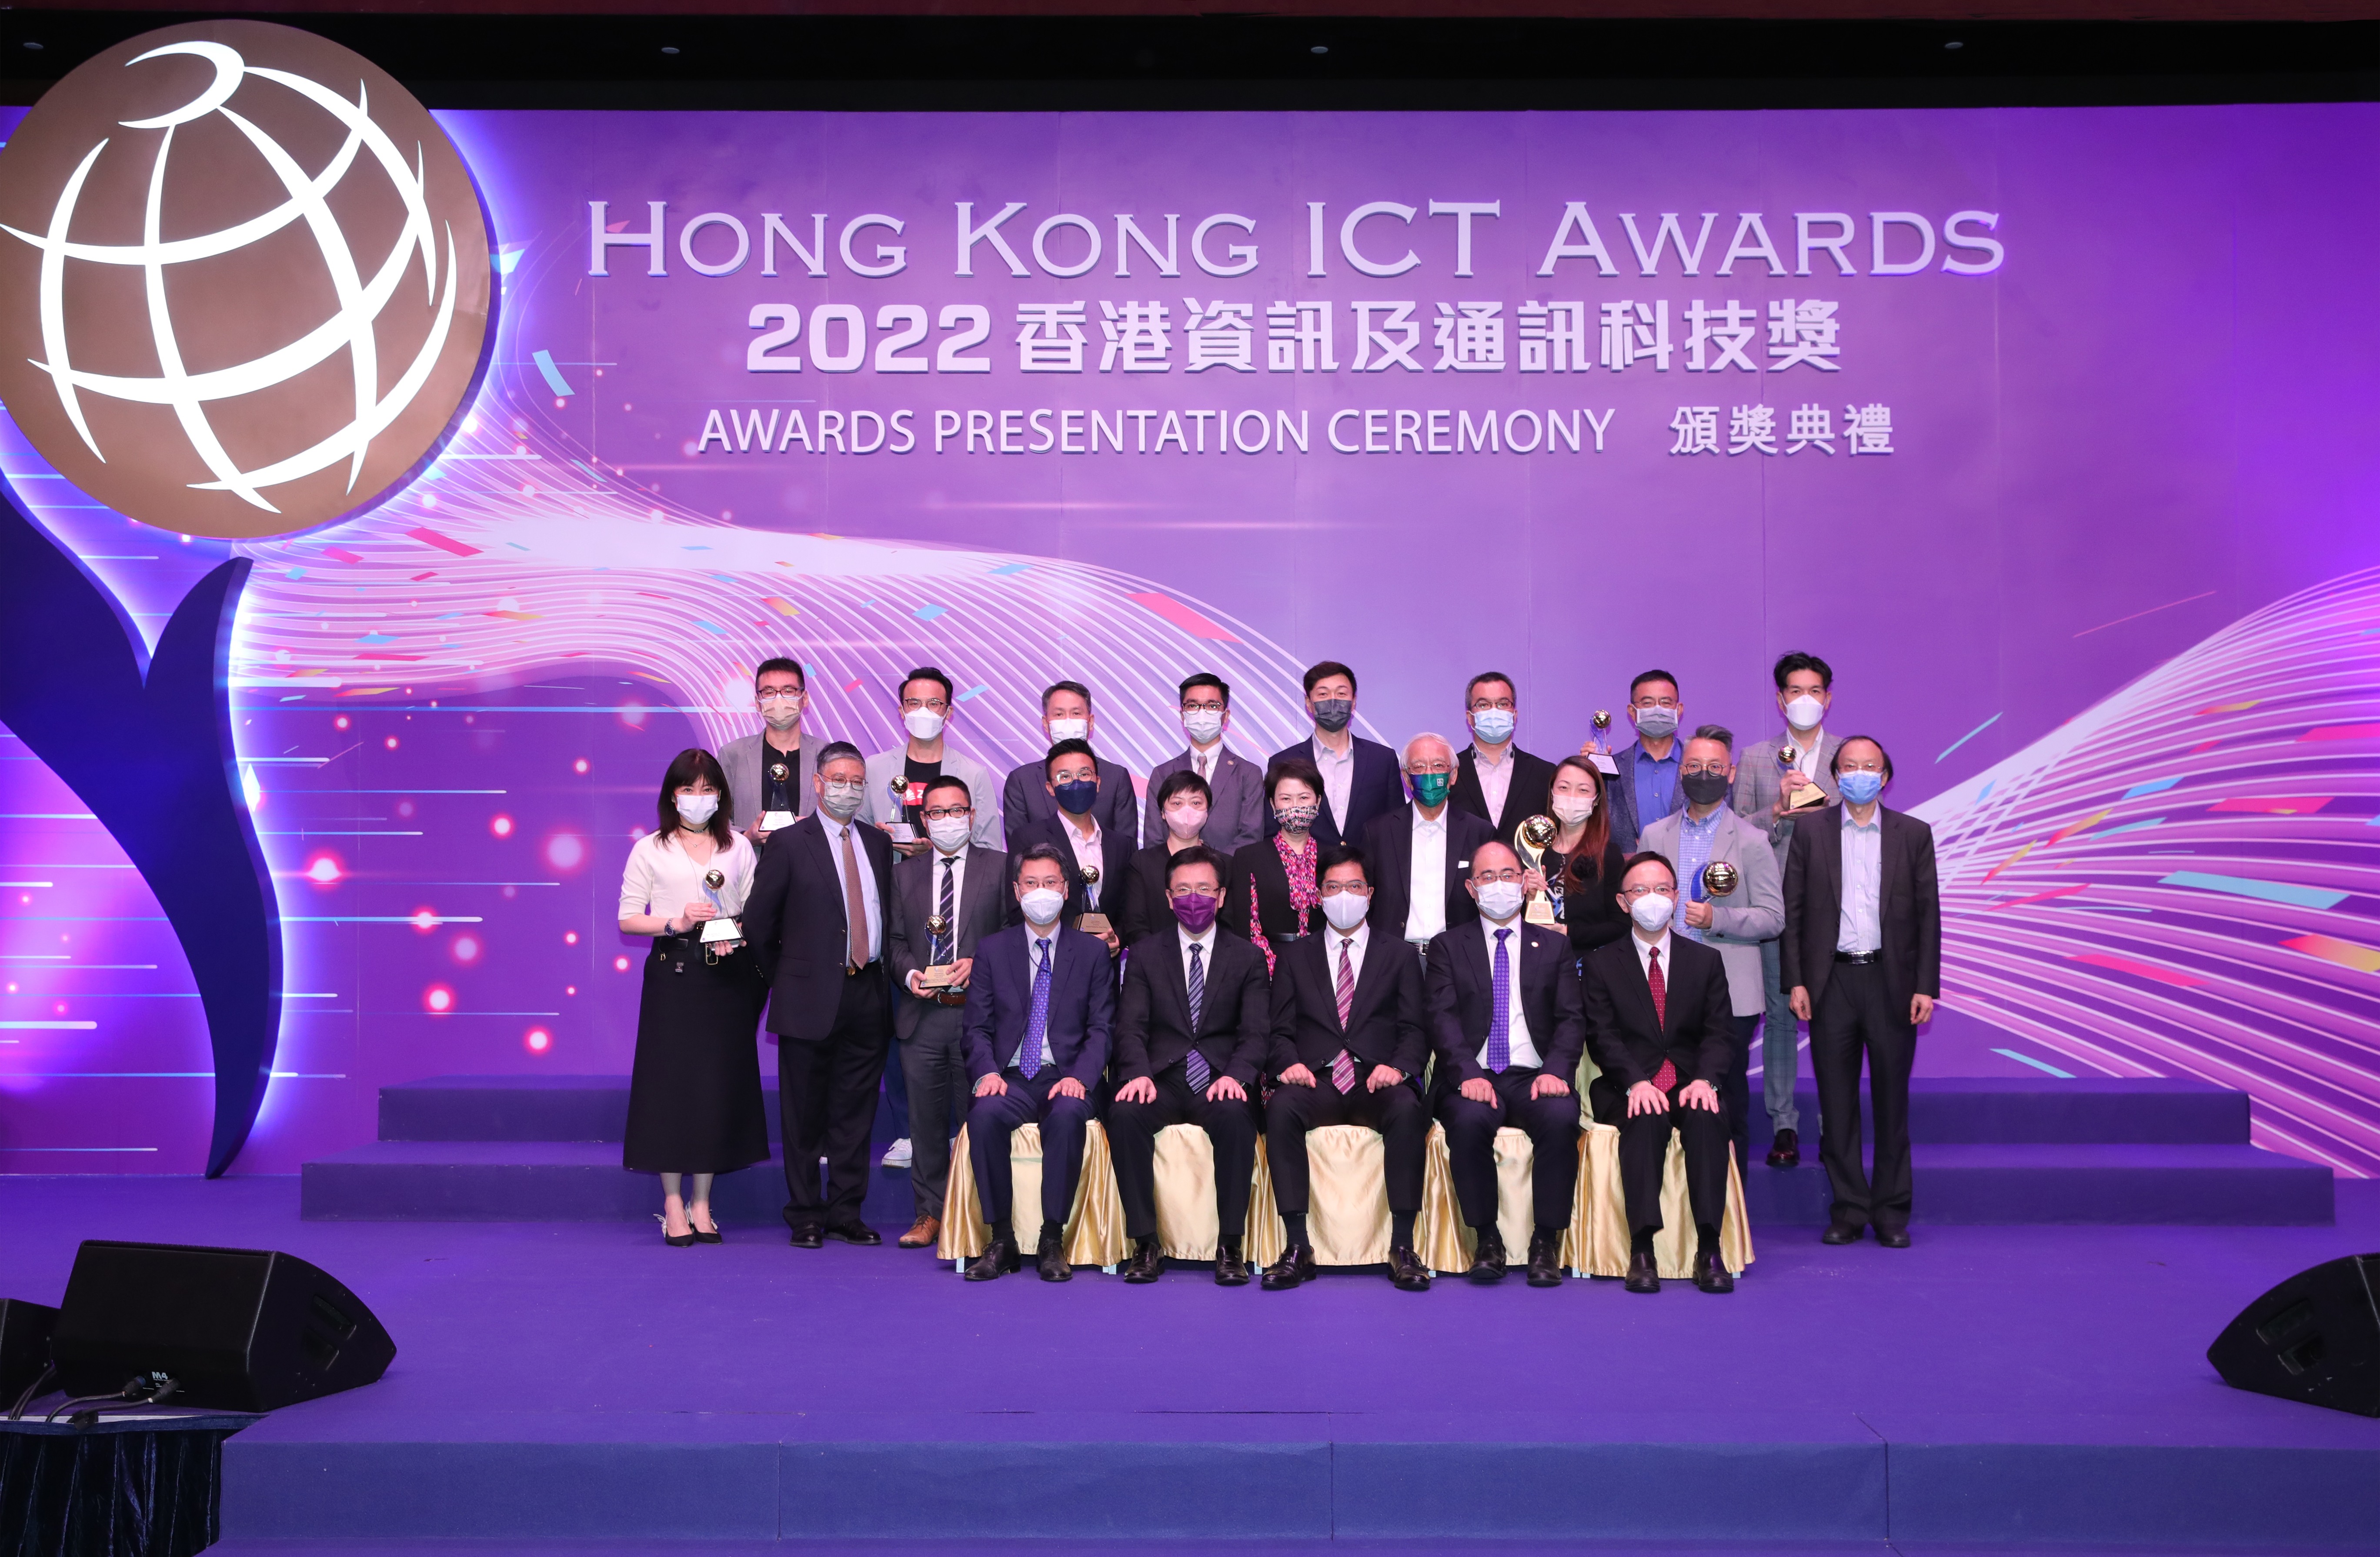 Hong Kong ICT Awards 2022 Smart Mobility Award Winners Group Photo